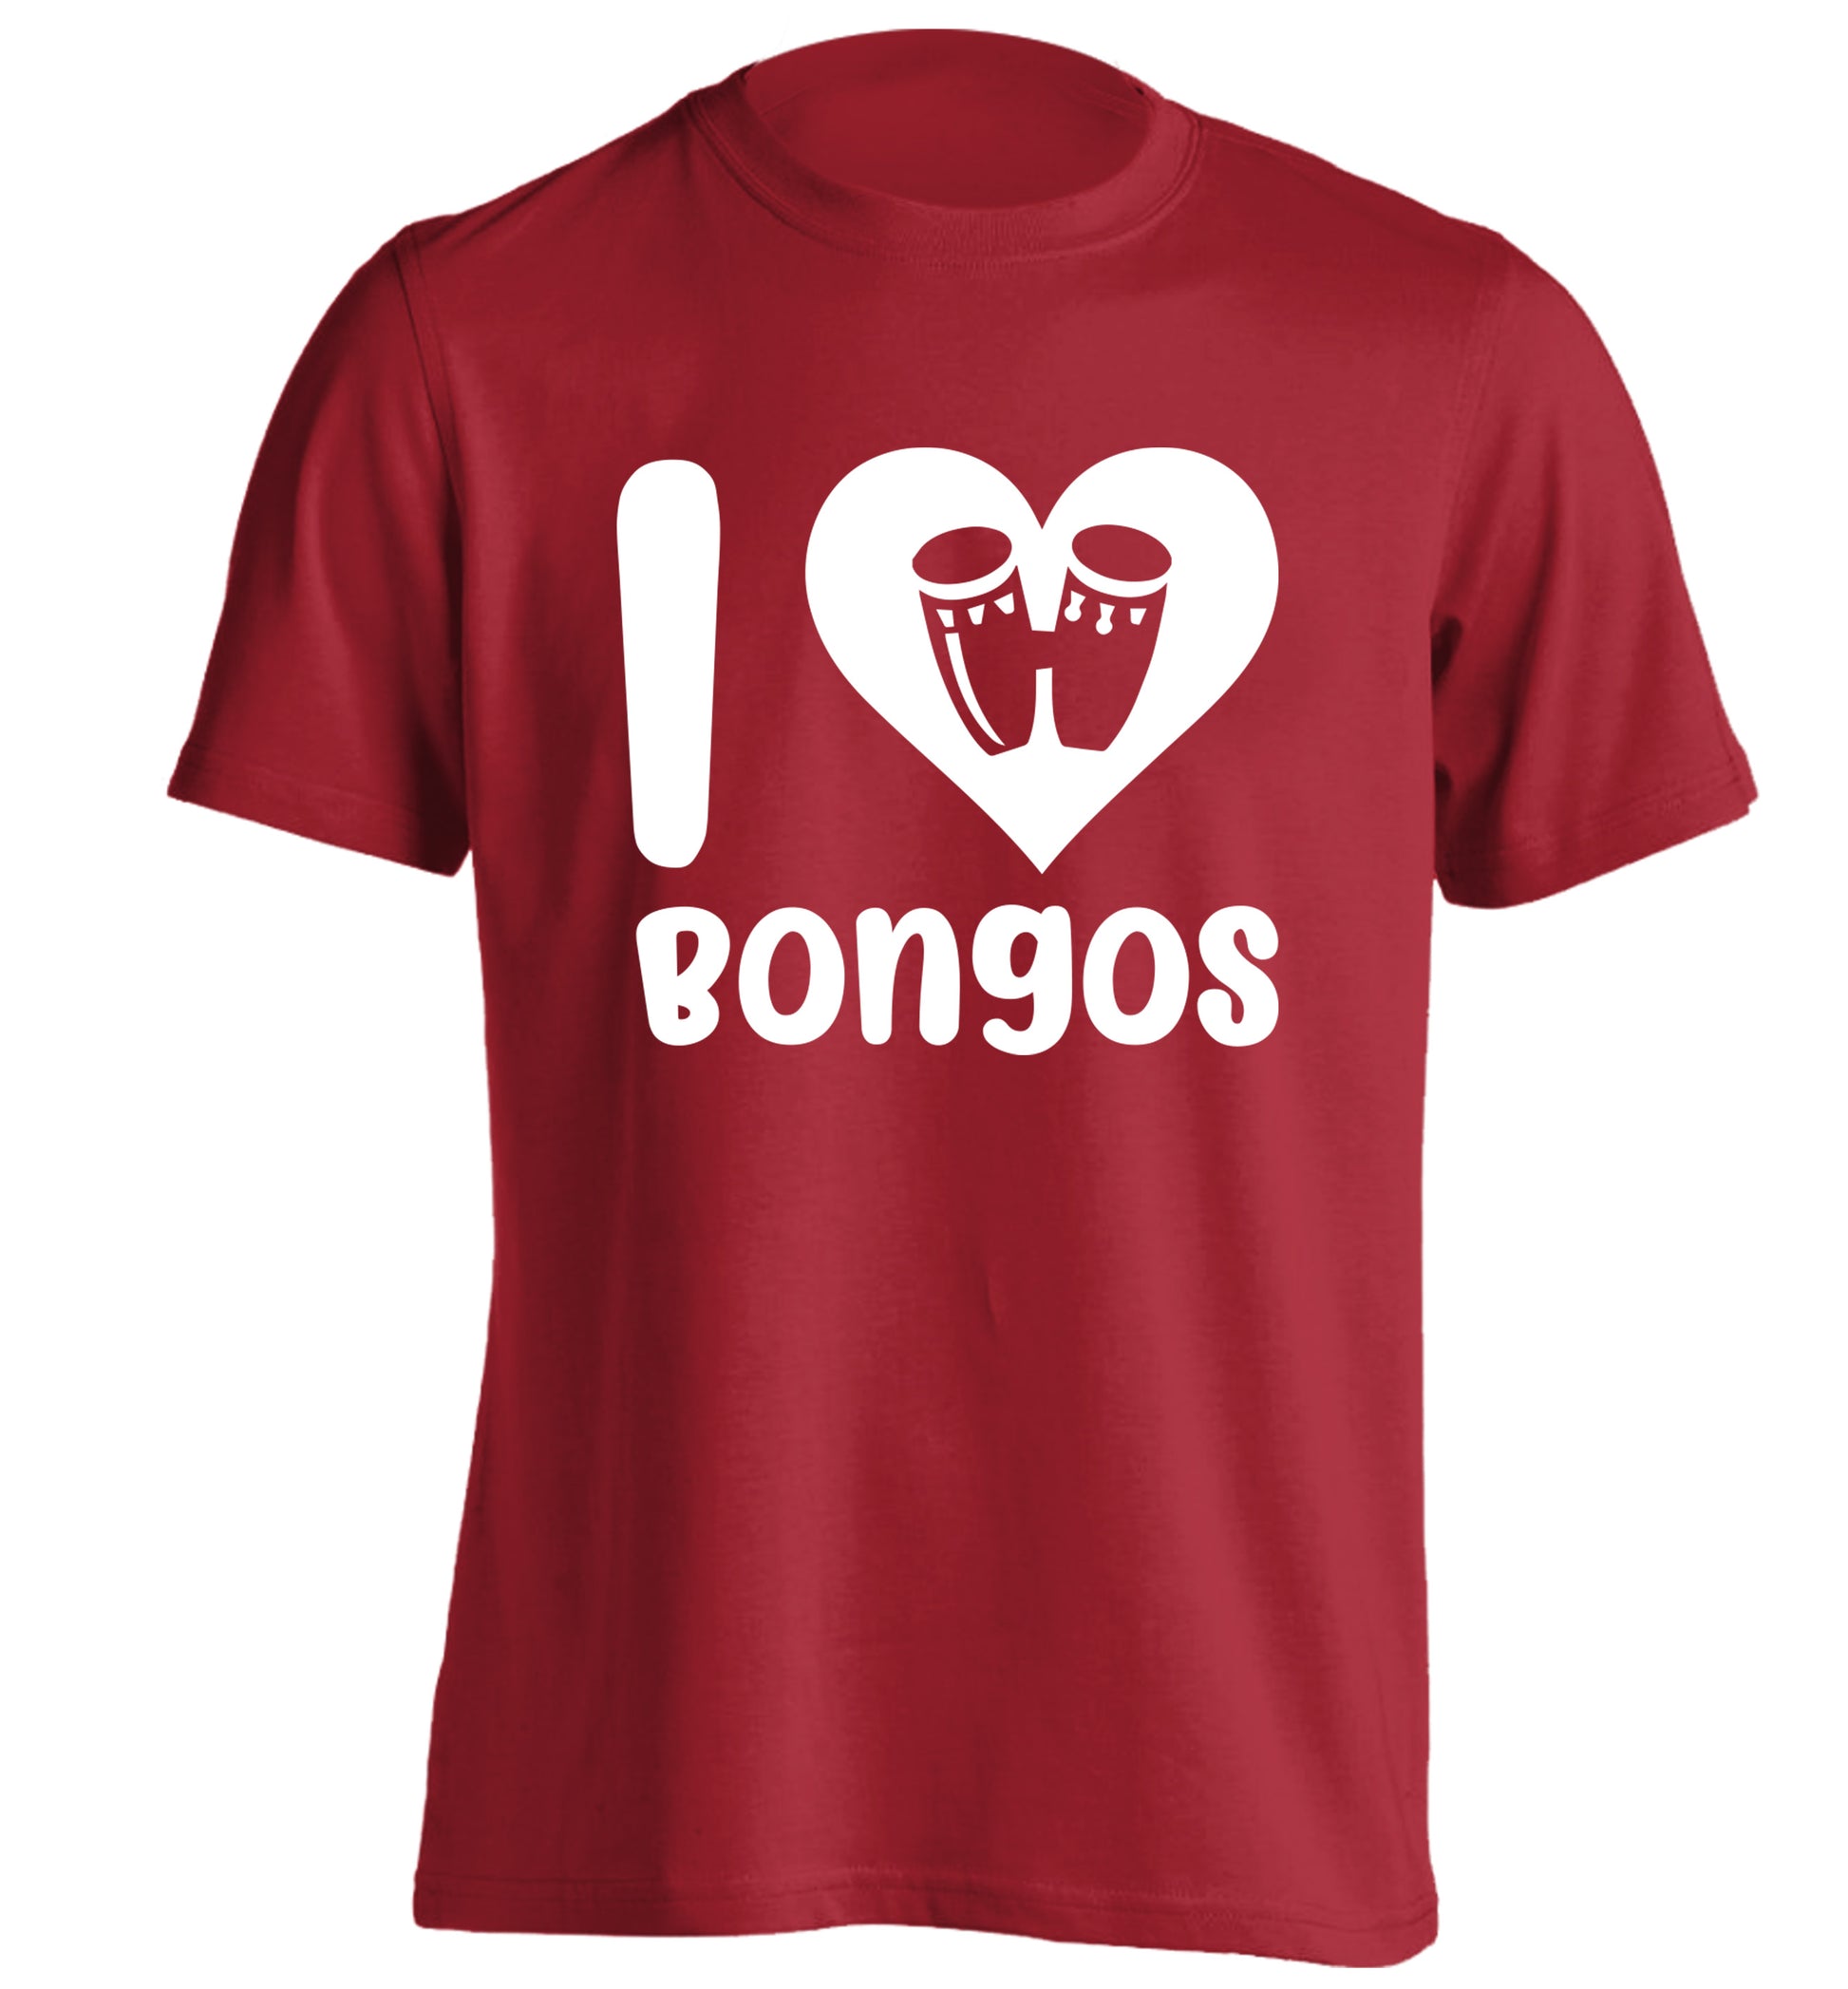 I love bongos adults unisex red Tshirt 2XL